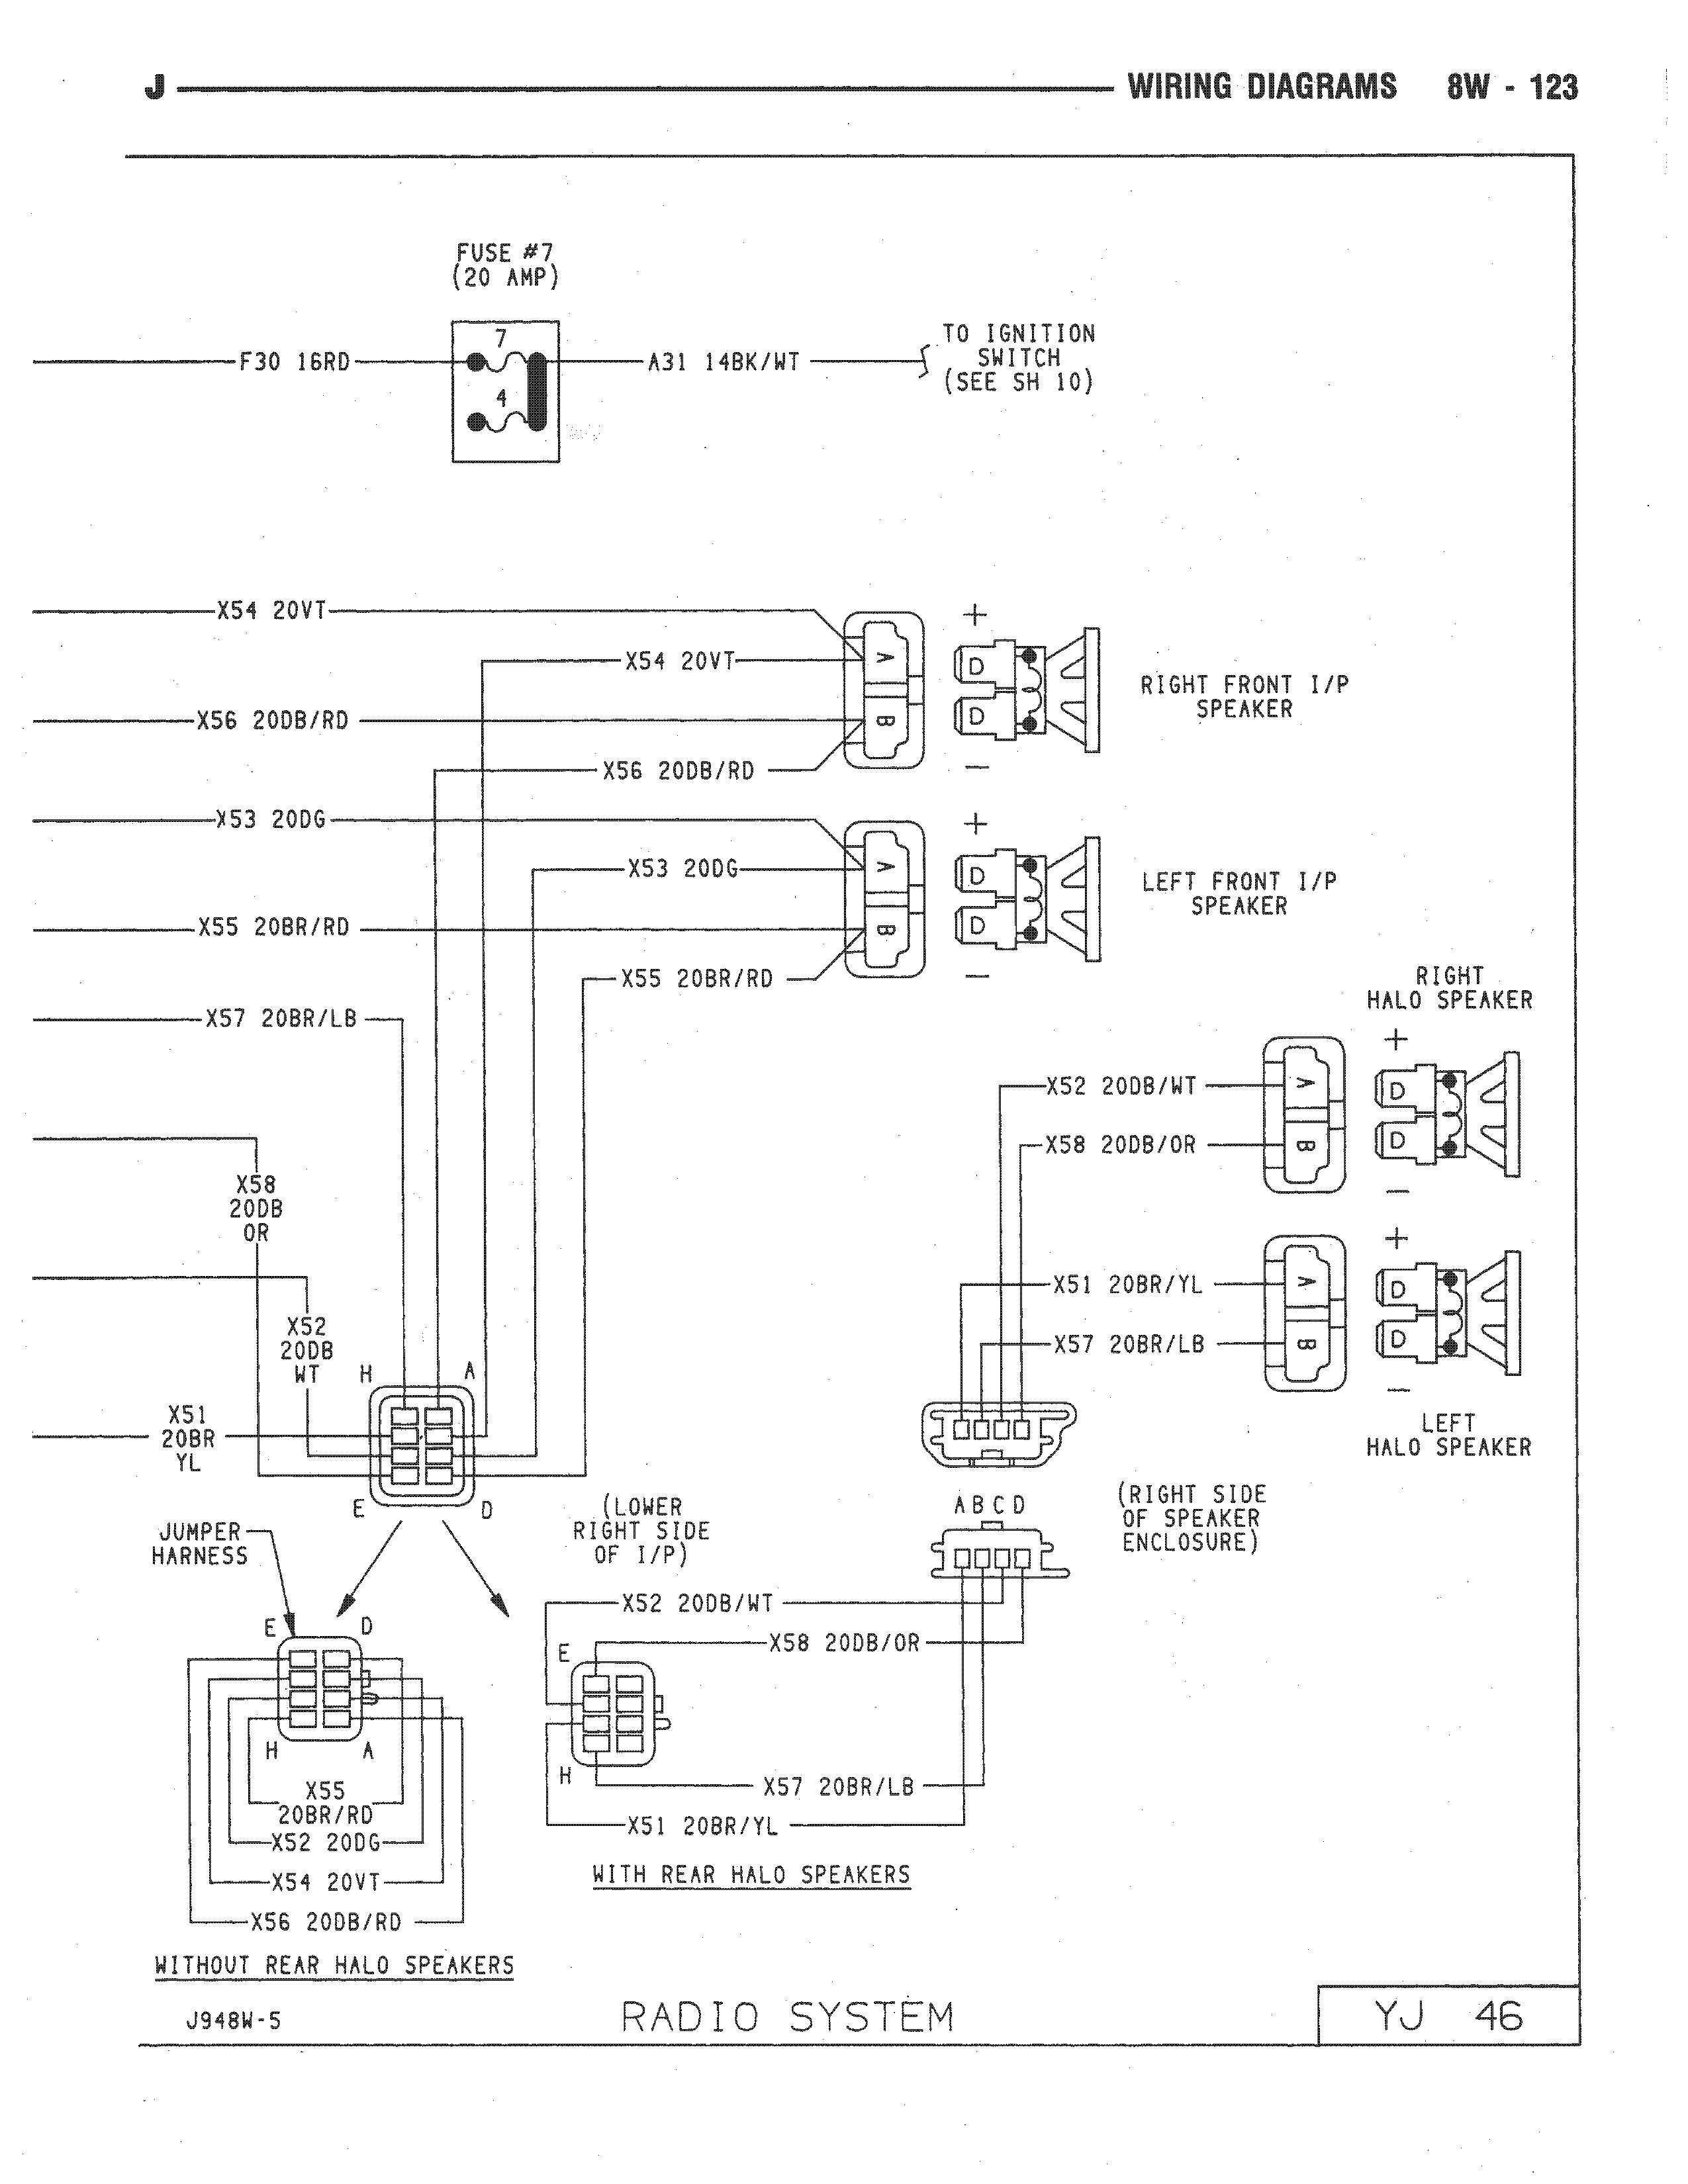 1996 jeep grand cherokee infinity gold amp wiring diagram new 1997 97 jeep grand cherokee wiring problems